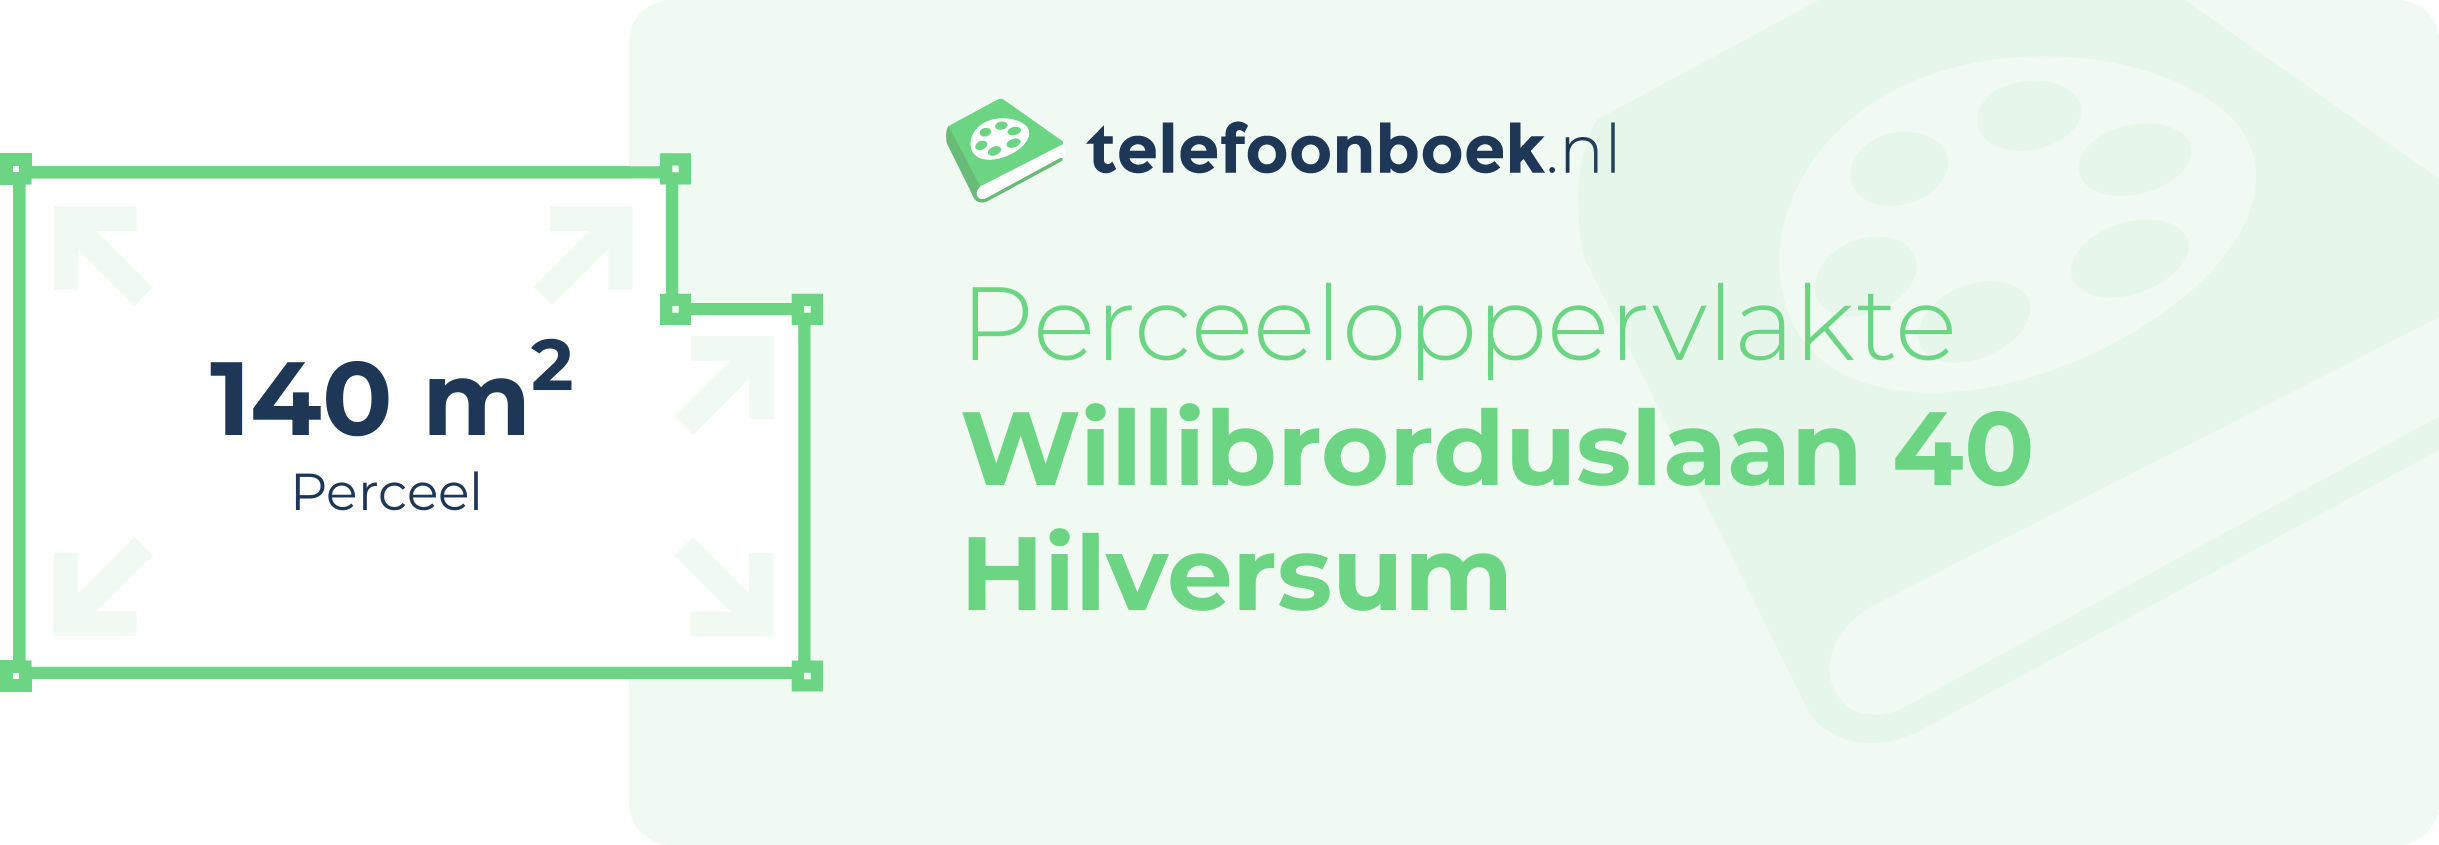 Perceeloppervlakte Willibrorduslaan 40 Hilversum